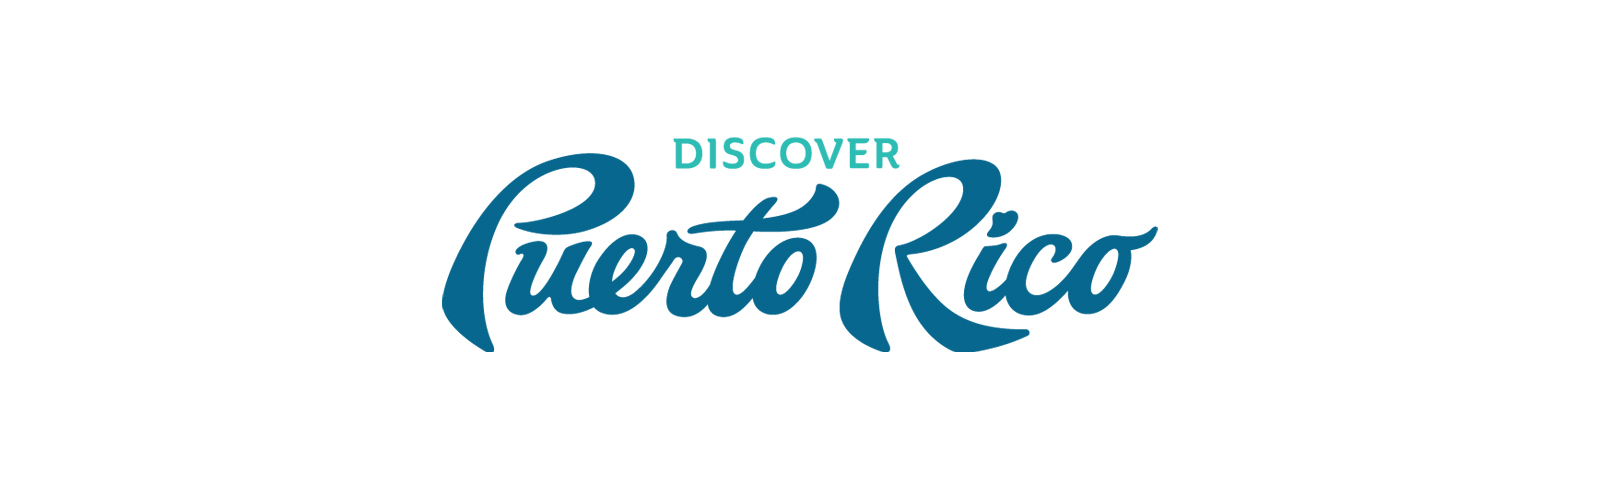 Discover Puerto Rico_Webinar_ABC-Site_Header_Placeholder_1600x489 copy